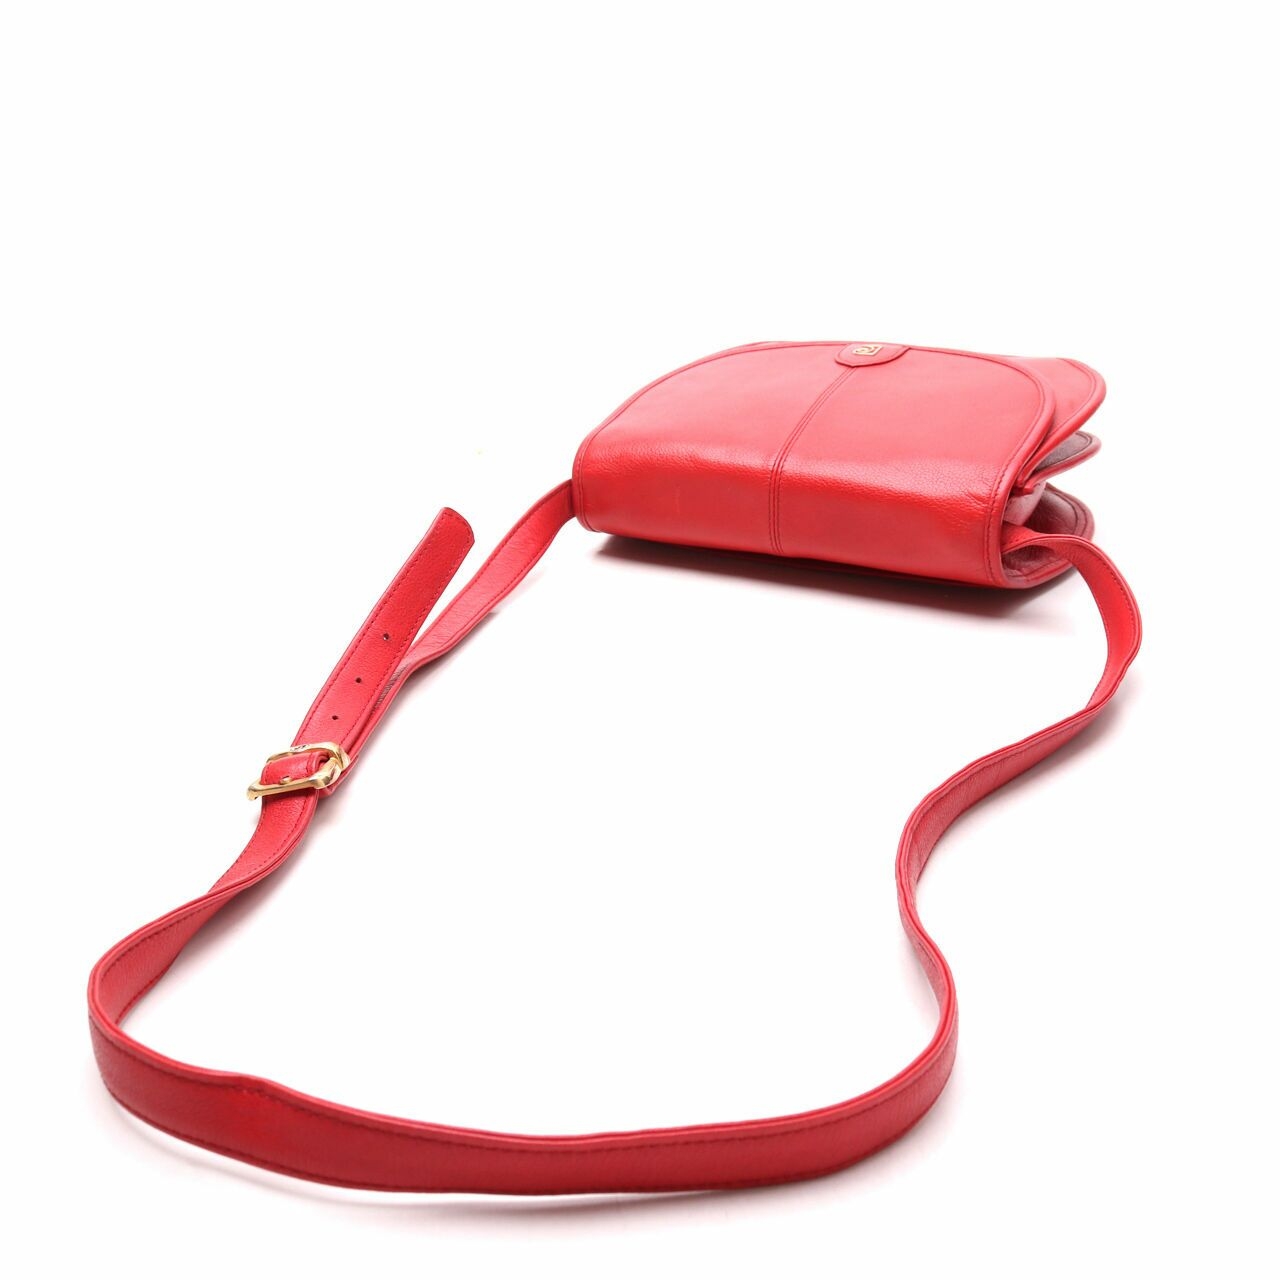 Pierre Cardin Red Sling Bag